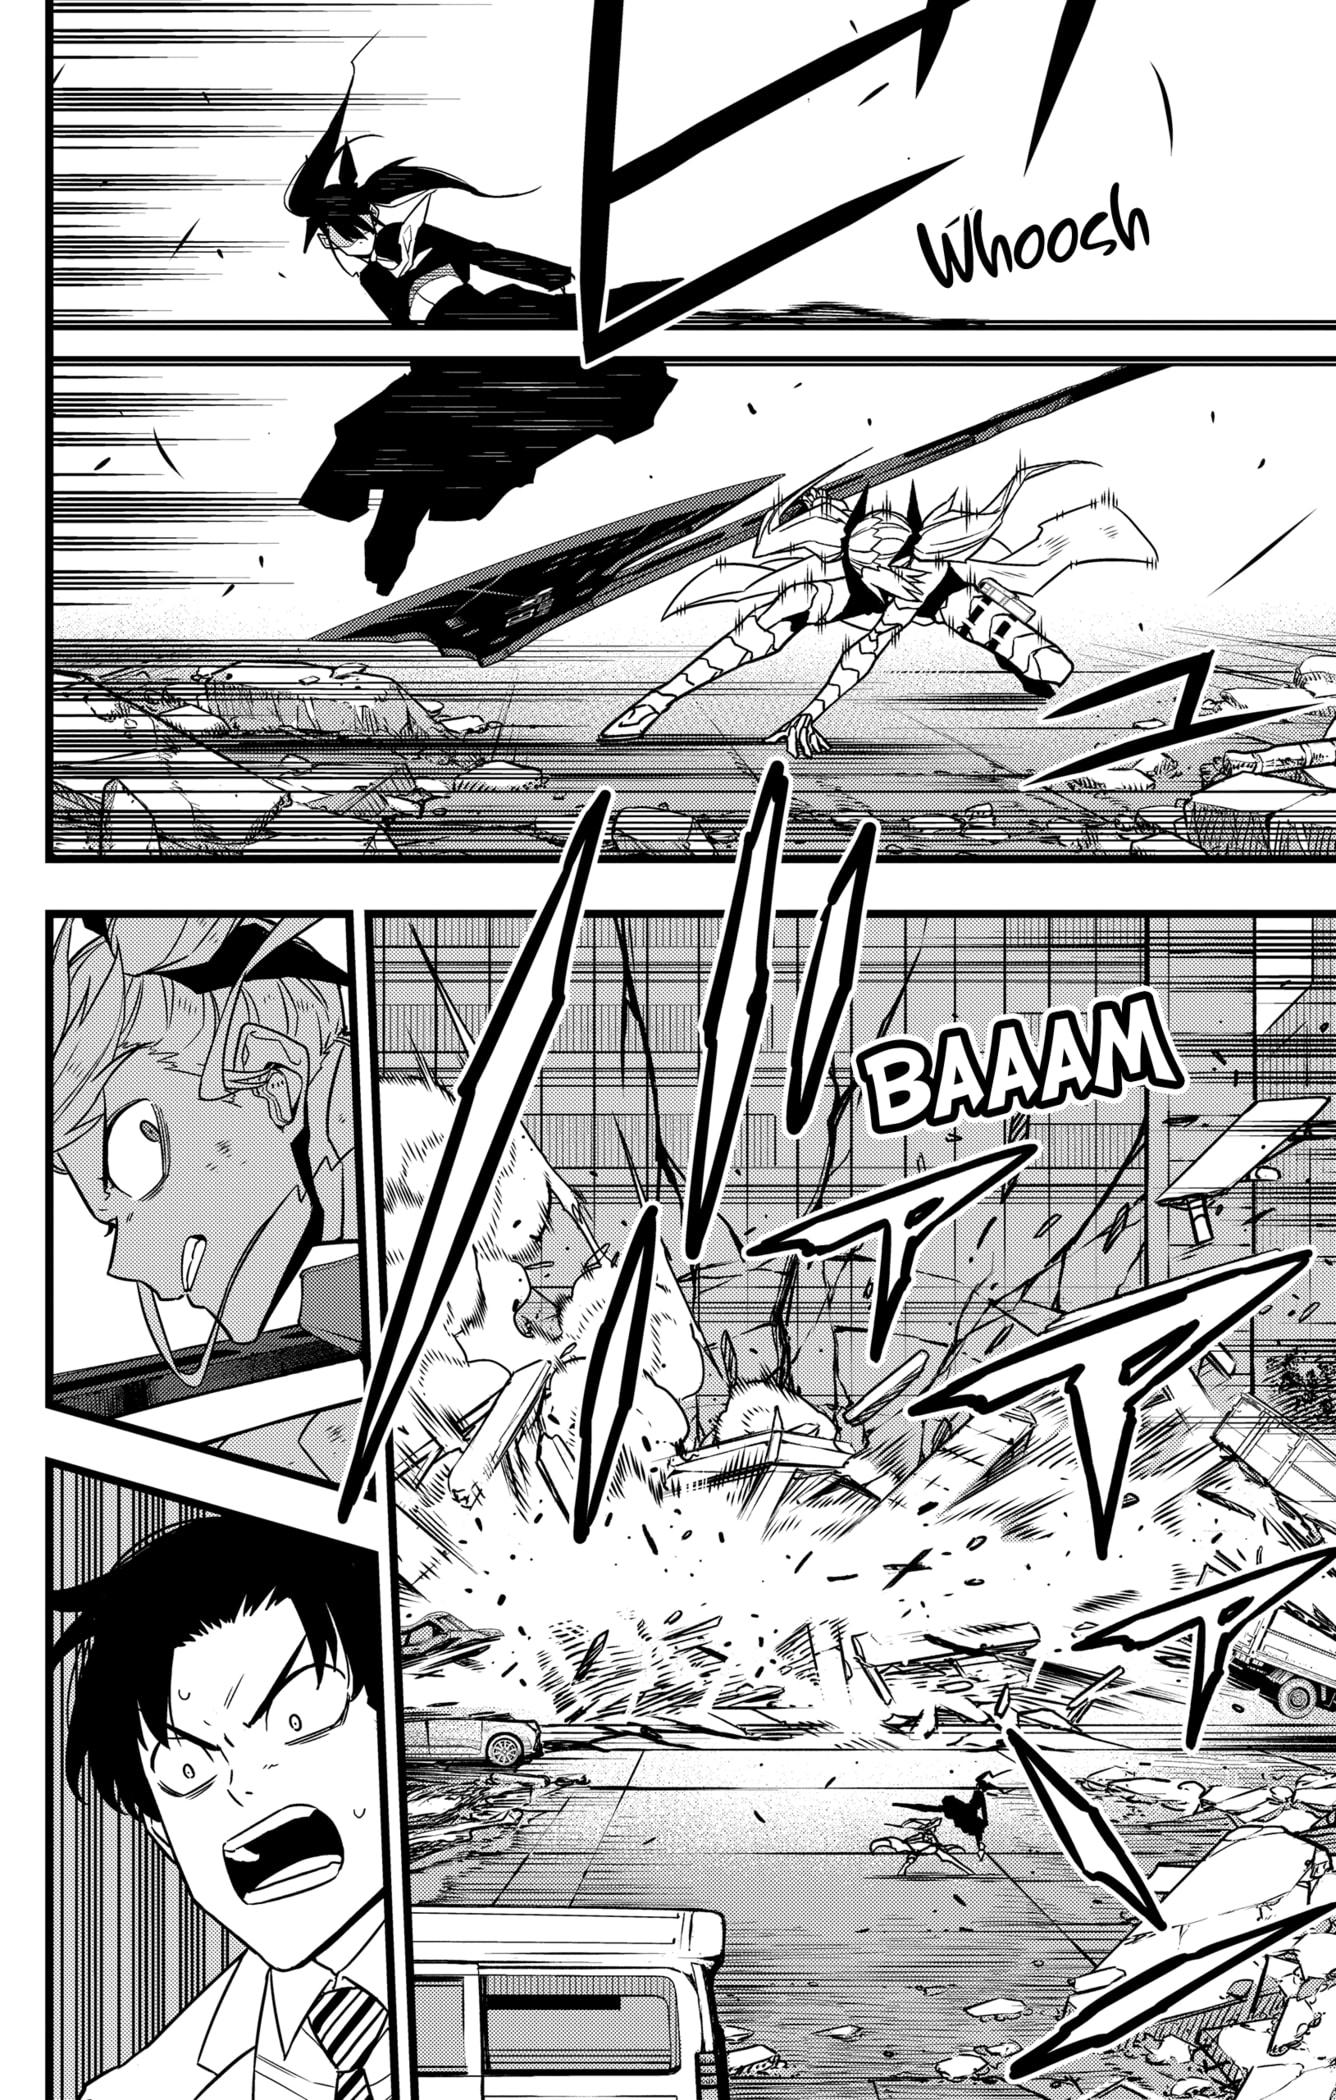 Kaiju No. 8 Chapter 78 page 6 - Mangakakalot